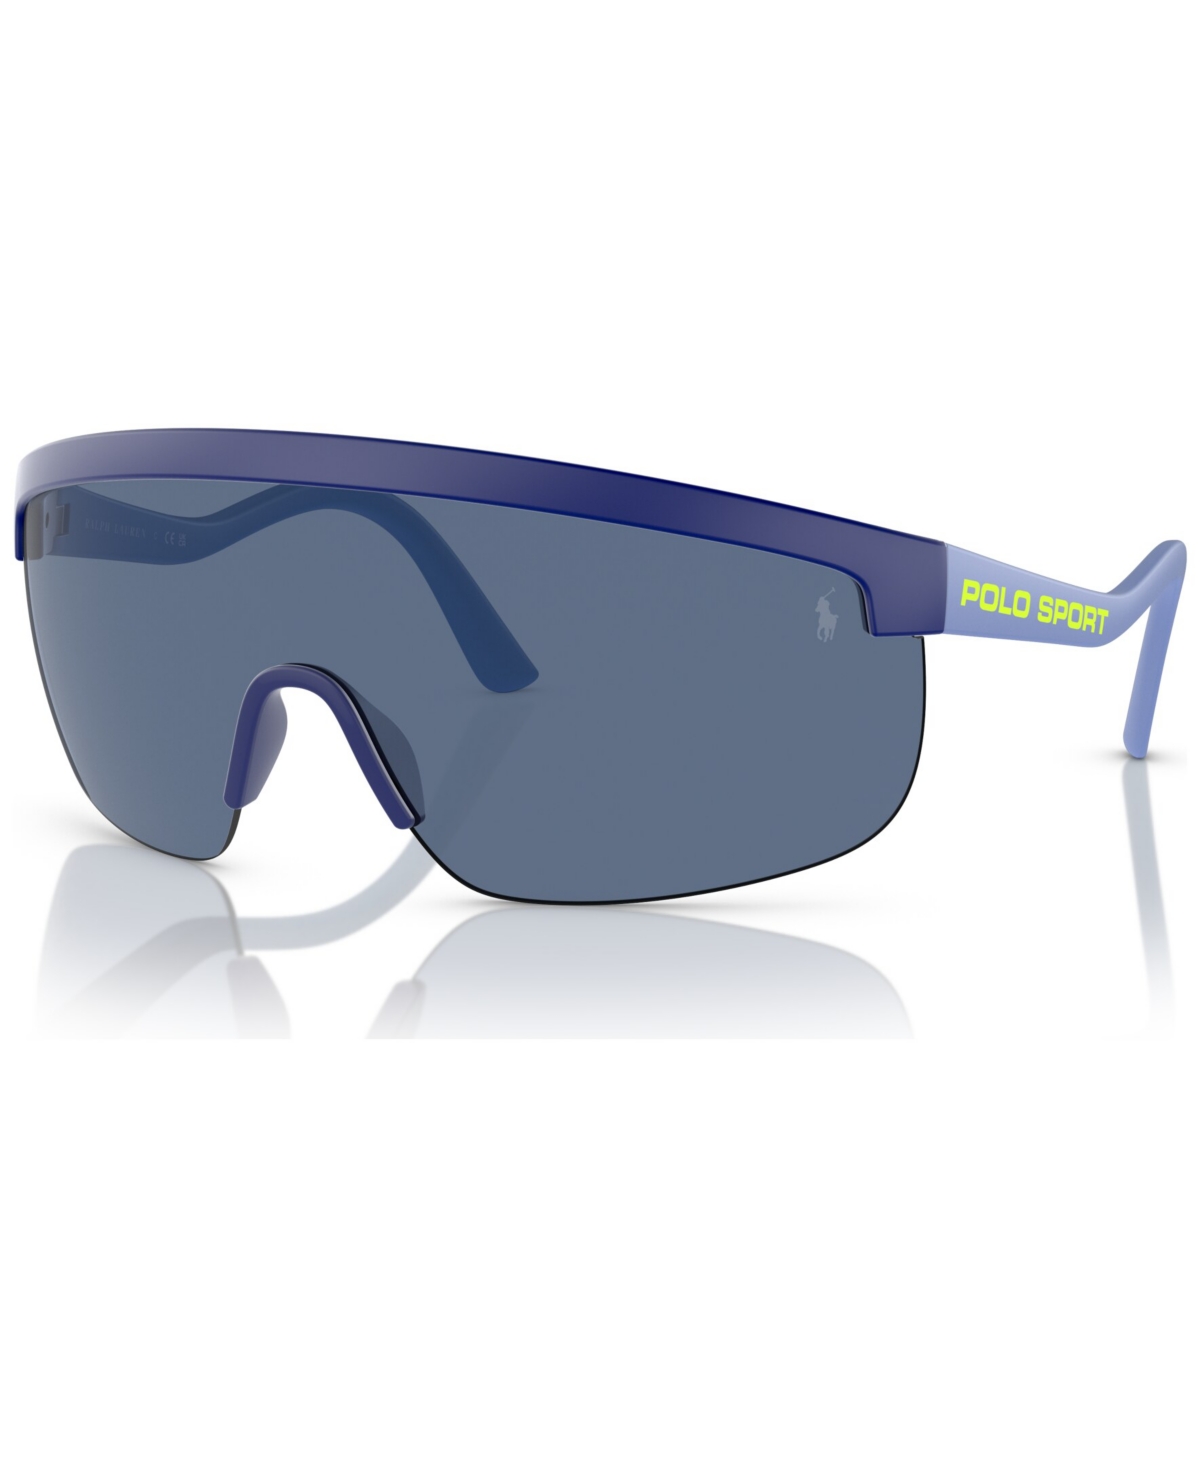 Polo Ralph Lauren Men's Sunglasses, 0ph4156 In Matte Blue